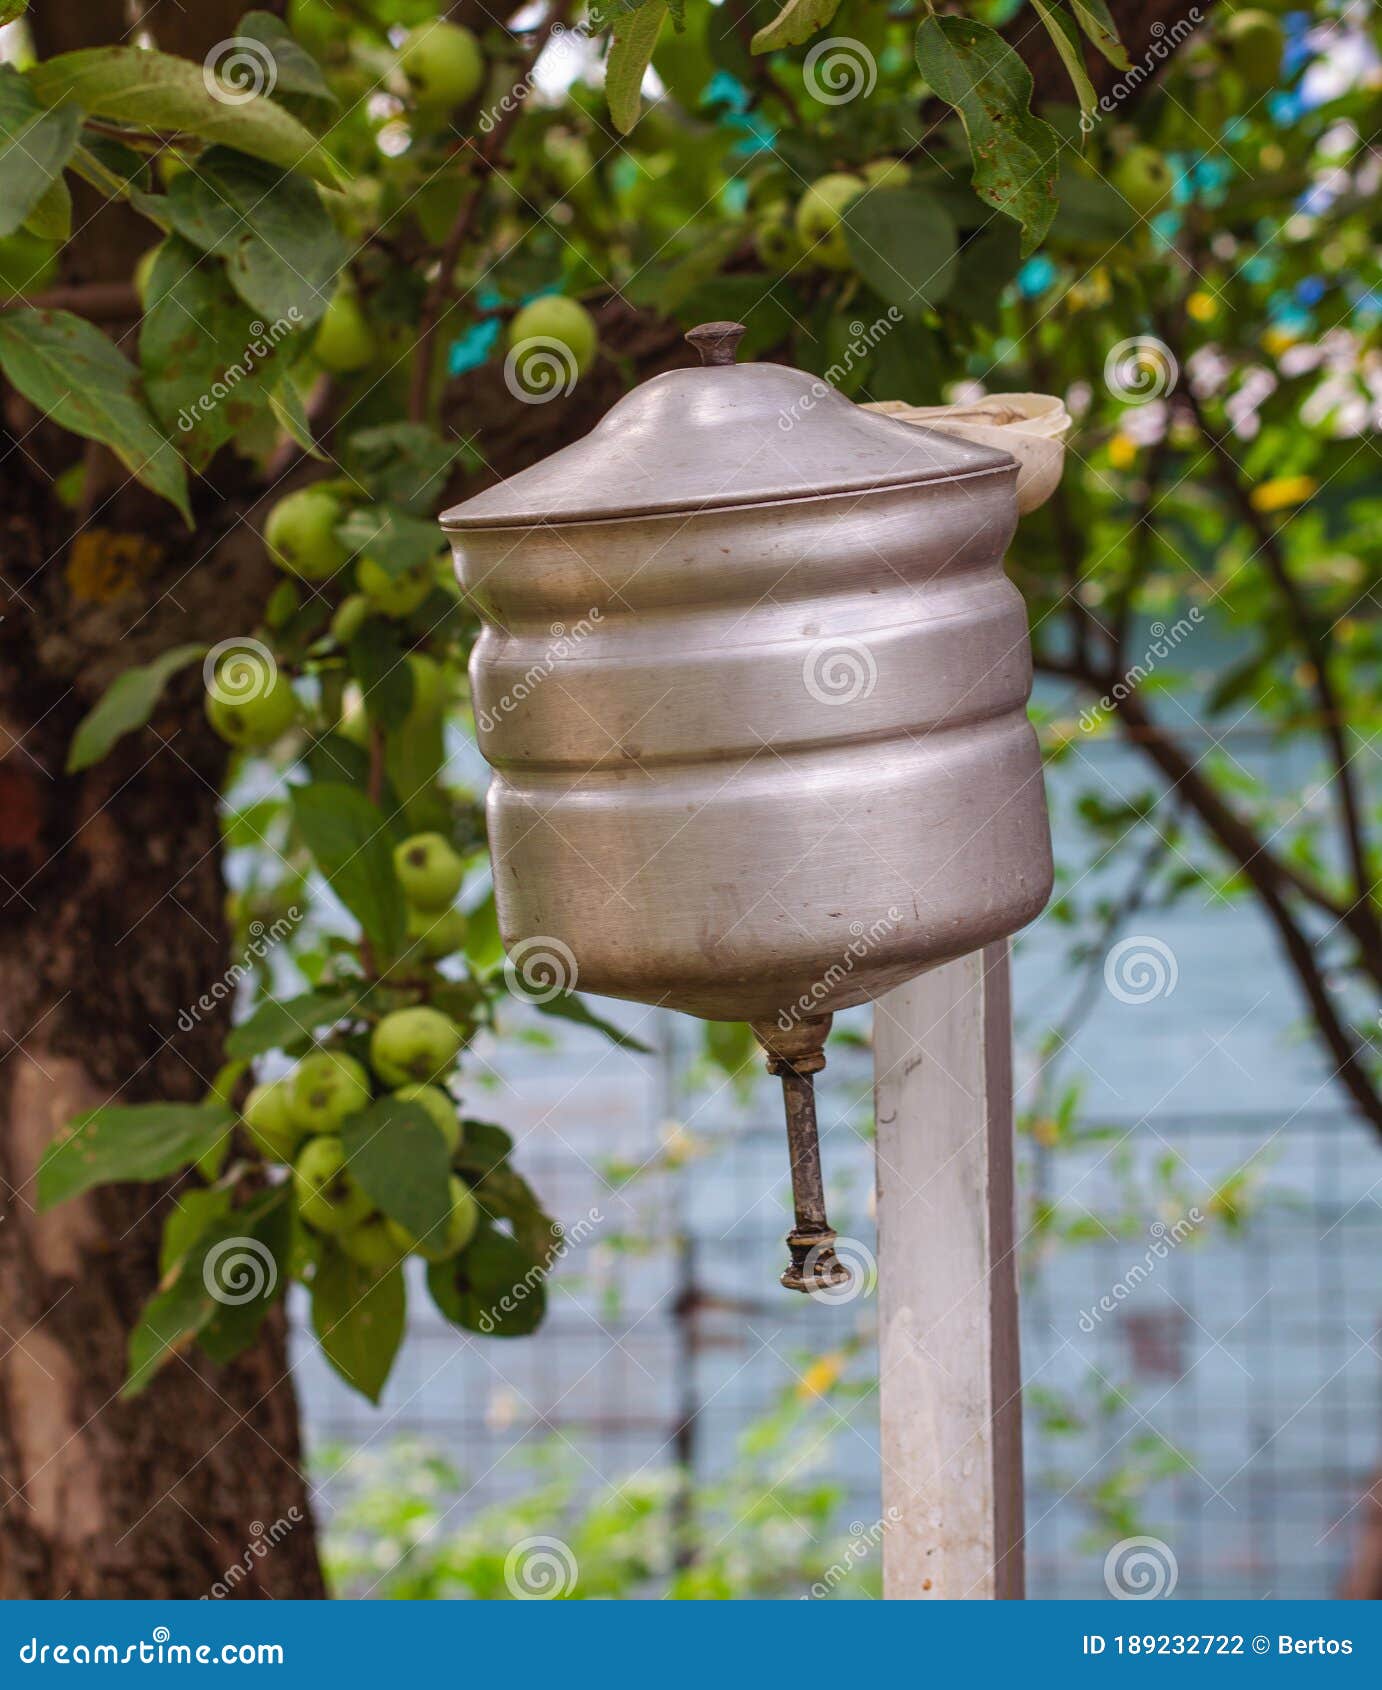 an old russian metal washstand in summer apple garden